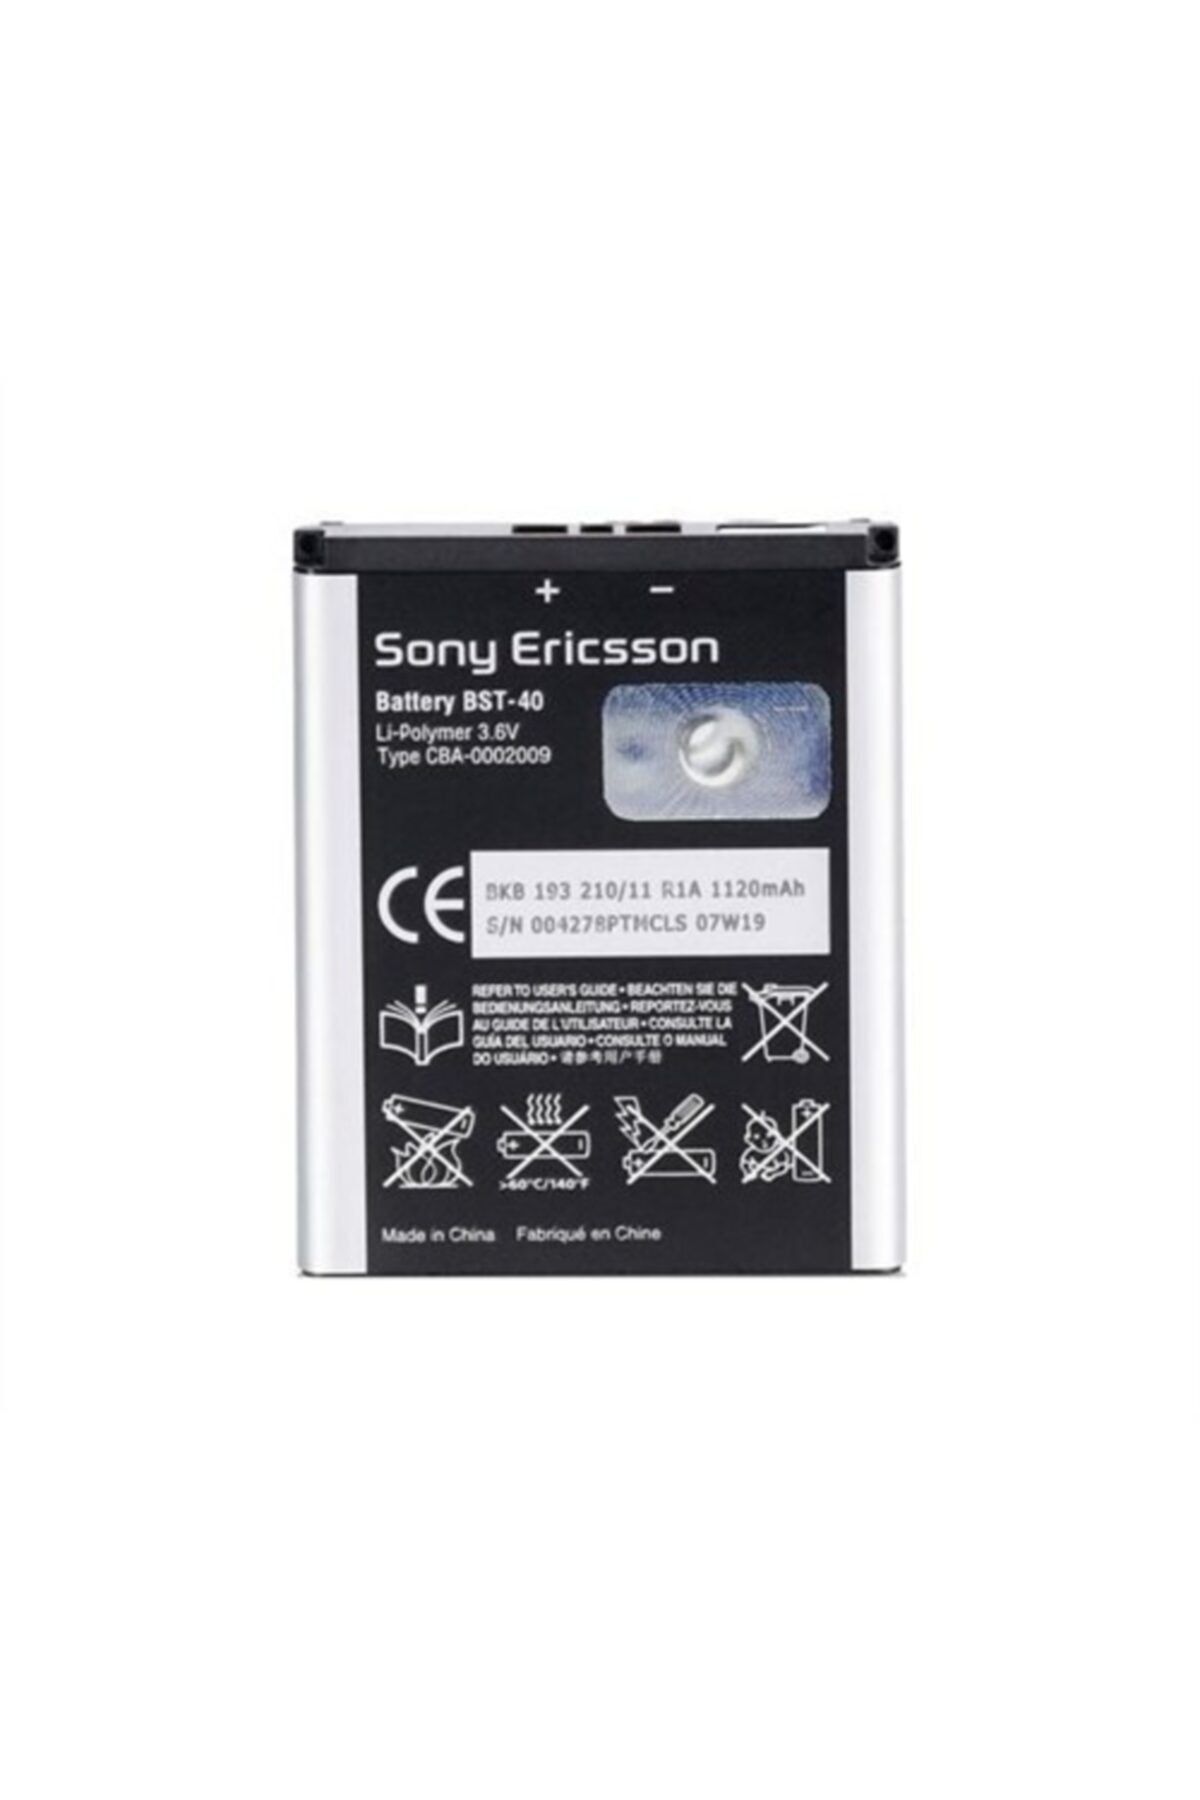 Sony Ericsson Bst-40 Batarya Pil